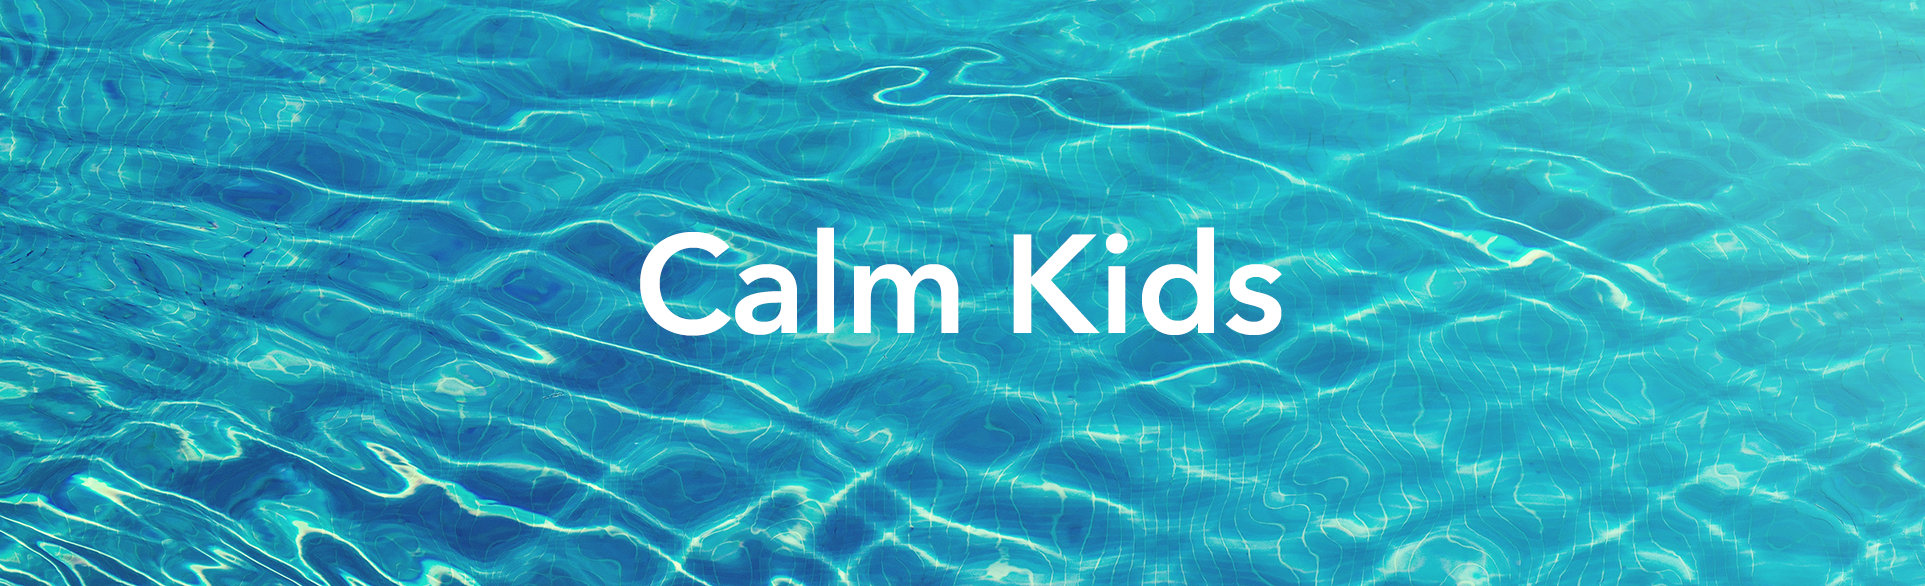 Calm Kids.png